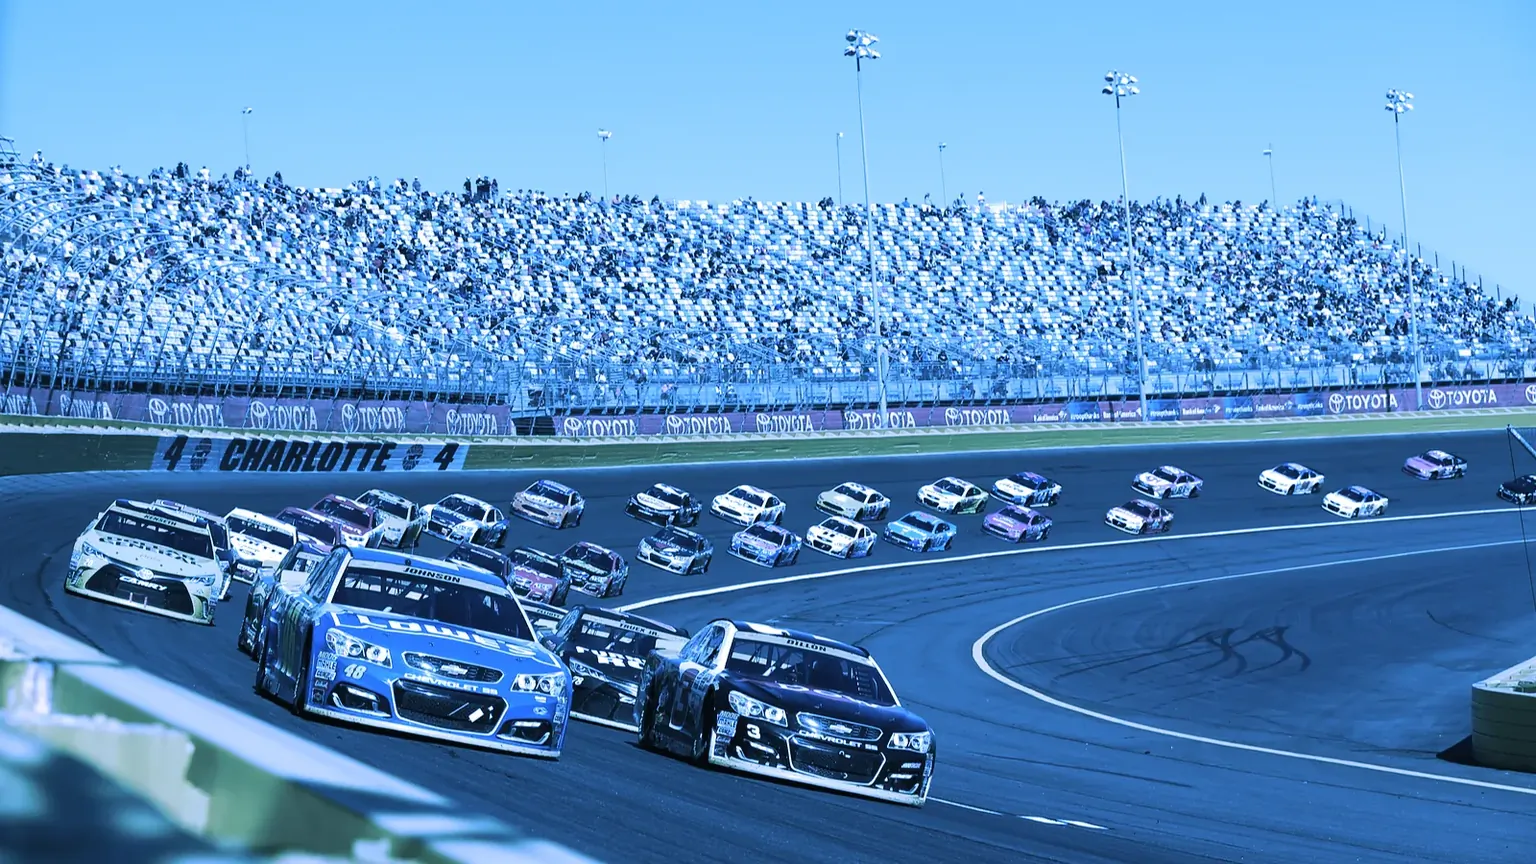 NASCAR. Image: Shutterstock